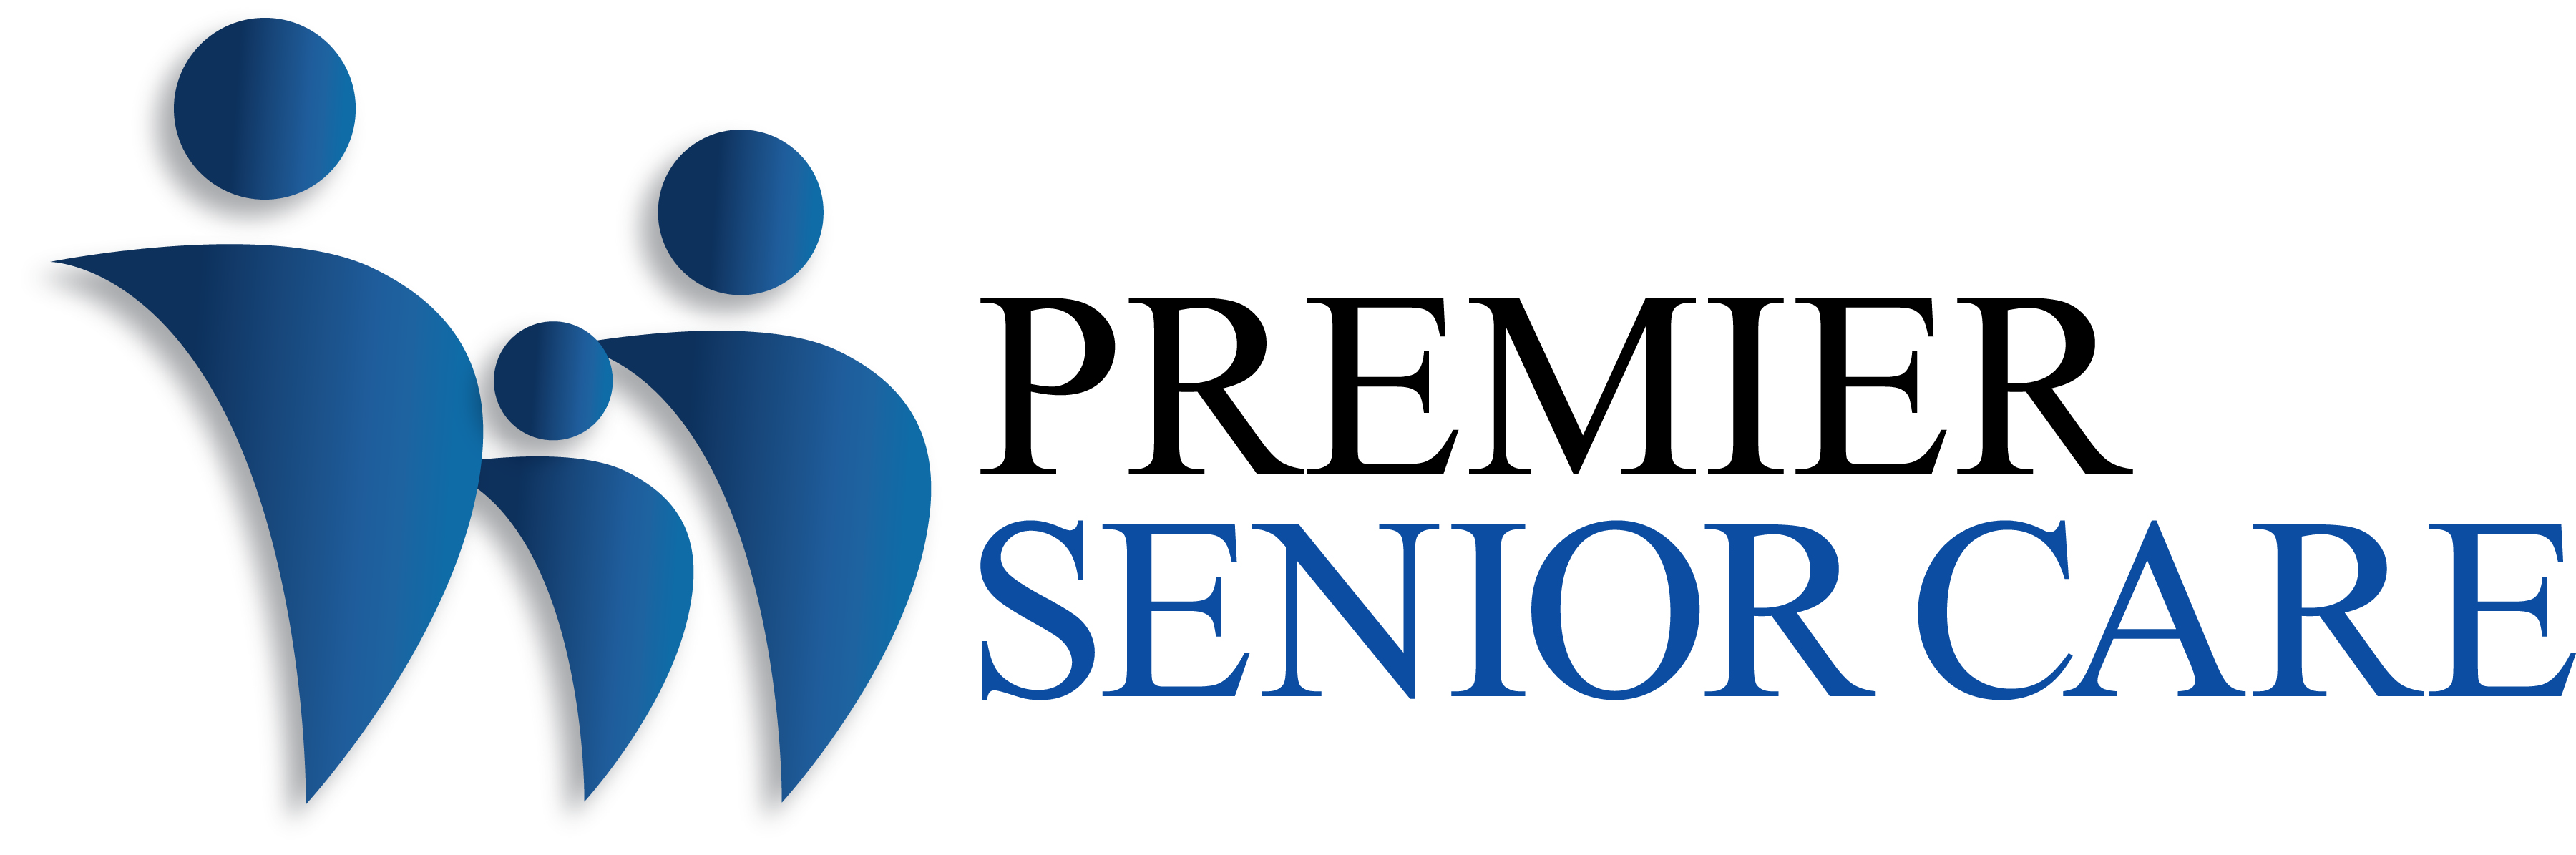 Premier Senior Care